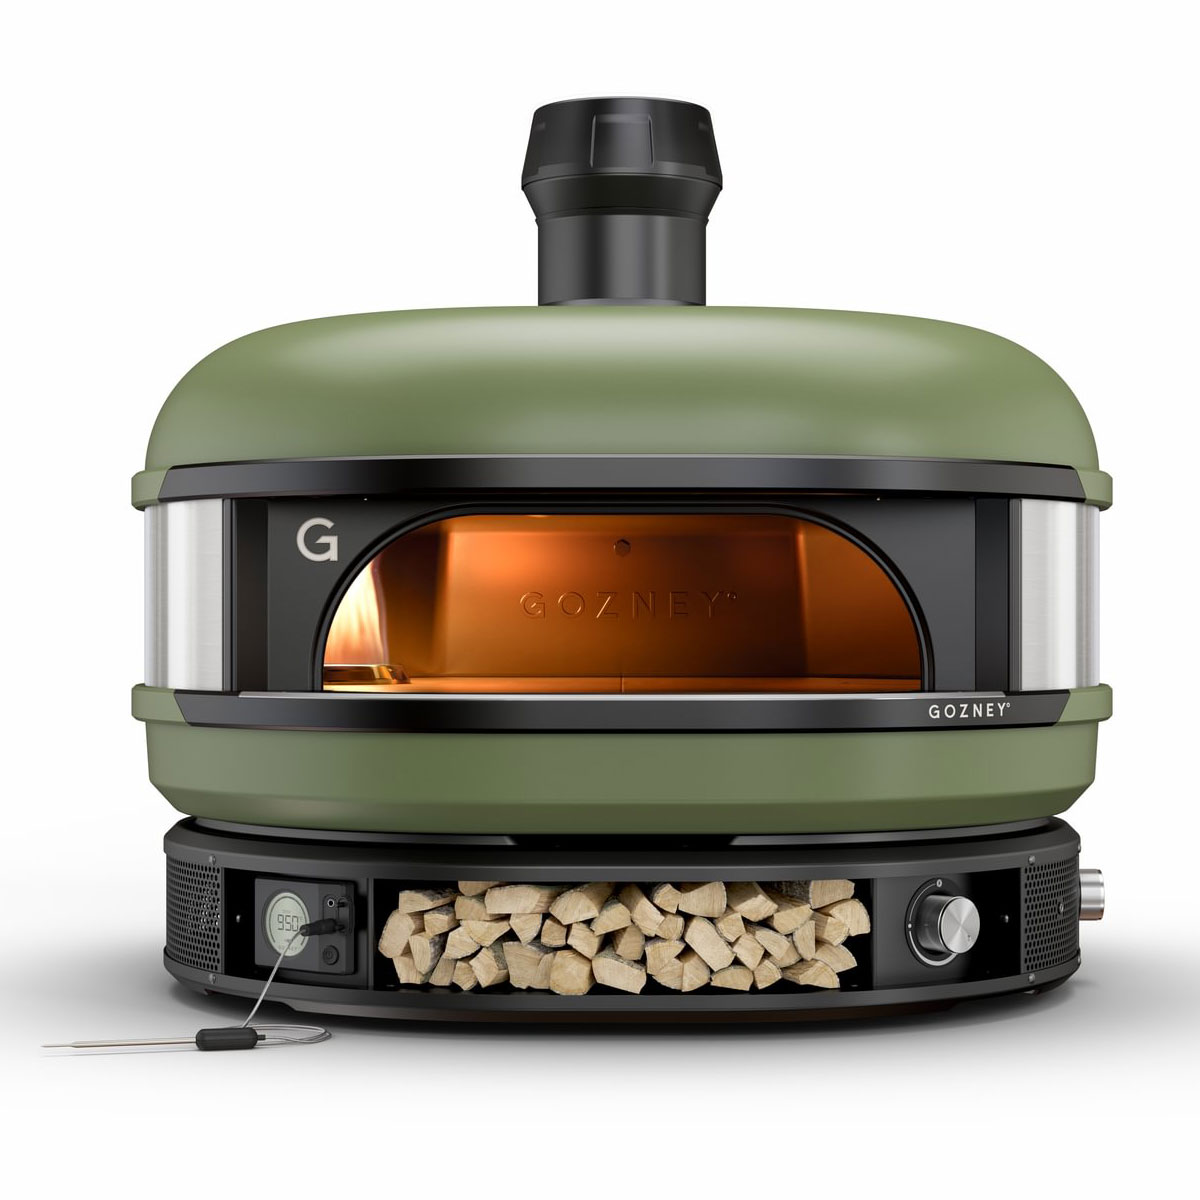 Gozney Dome Dual-Fuel Pizzaofen, olivgrün von Gozney